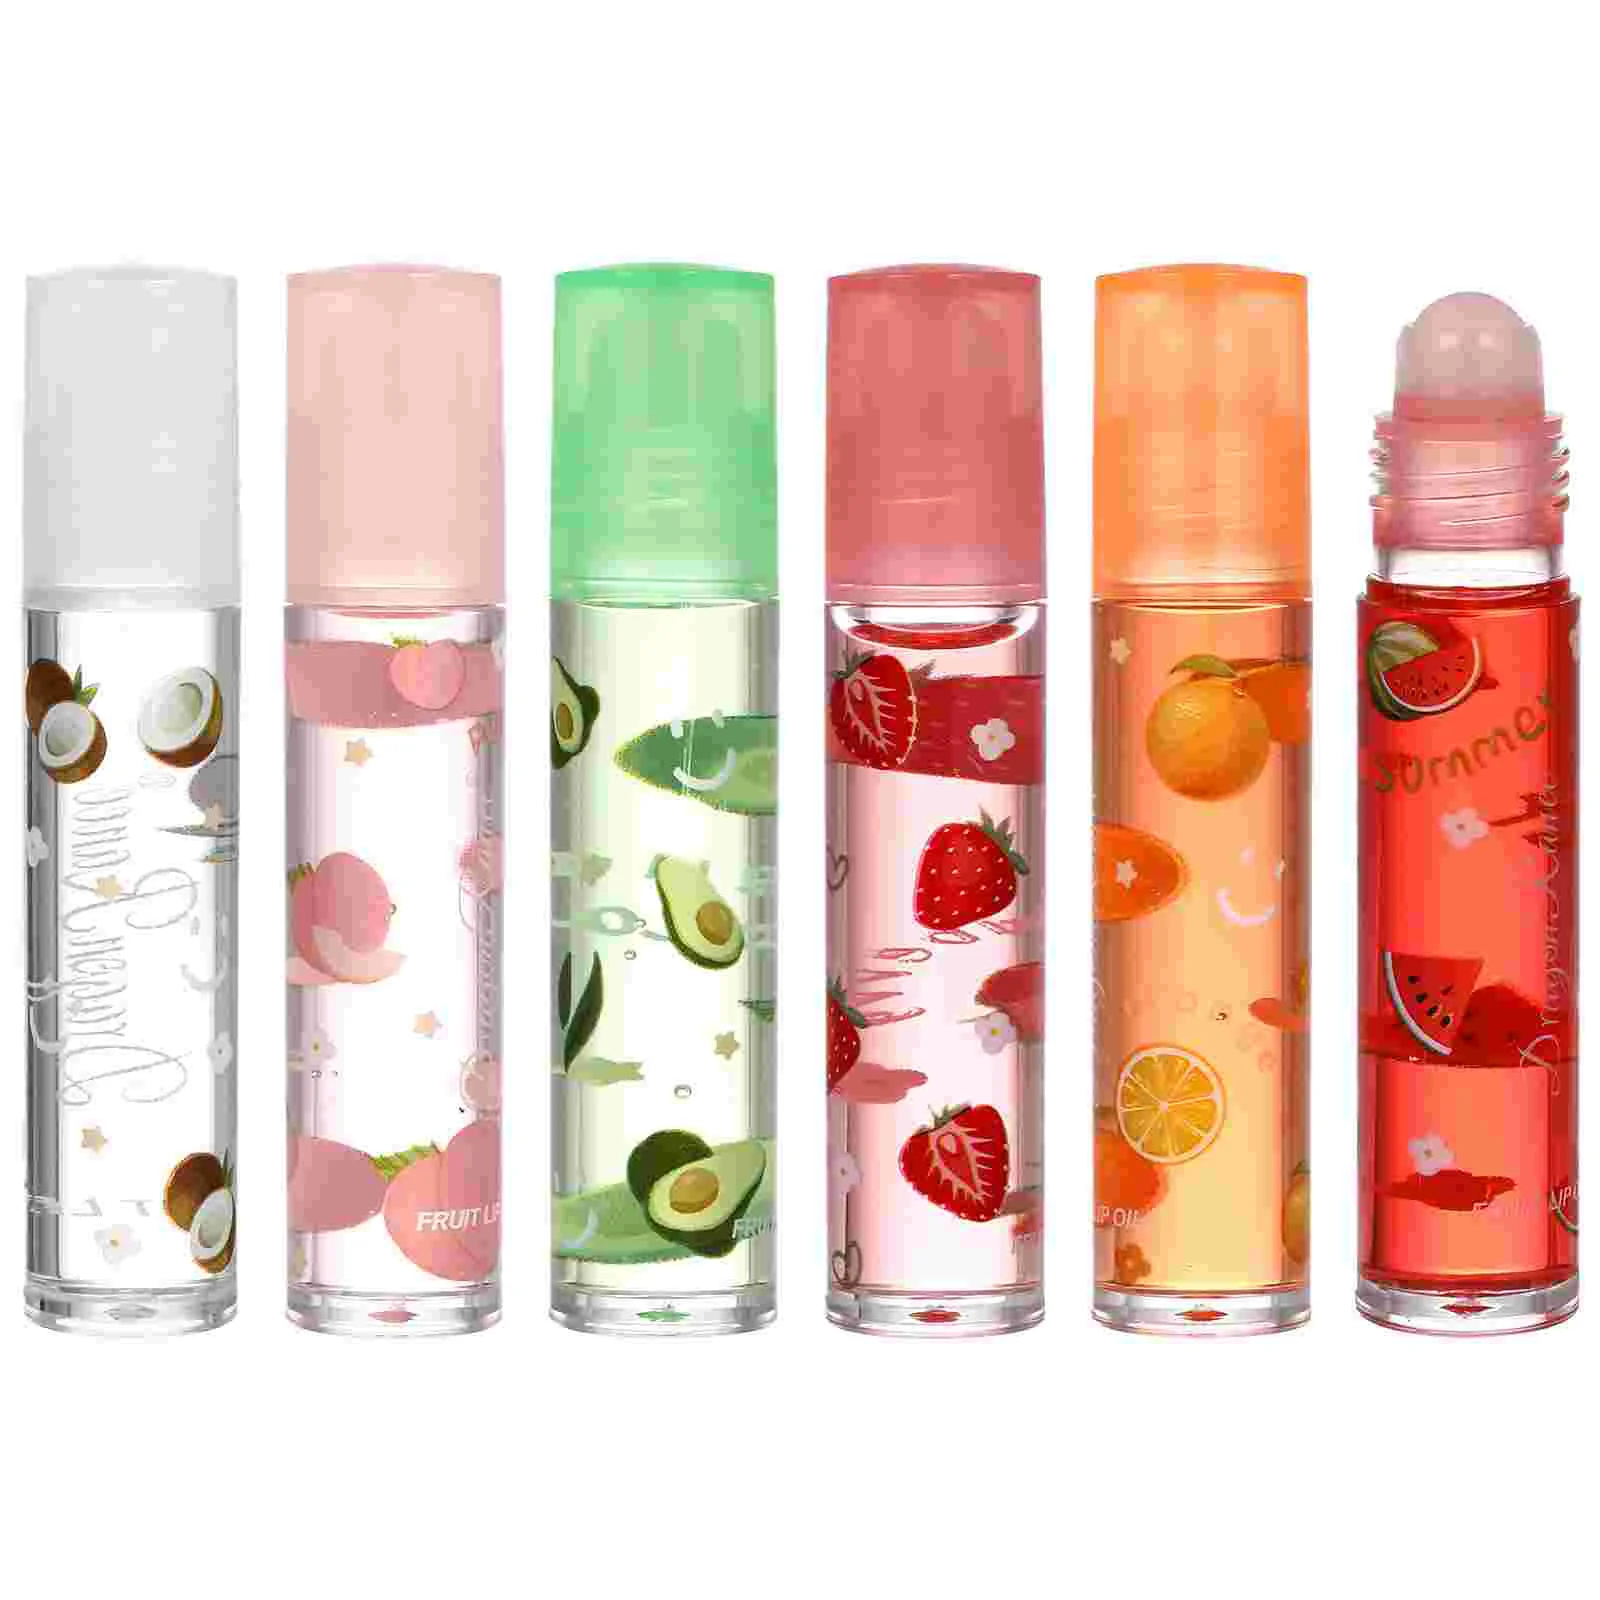 

6 Pcs Fruit Lip Balm Moisturizing Lipstick Gloss Clear Nourishing Flavored Liquid Stocking Stuffer